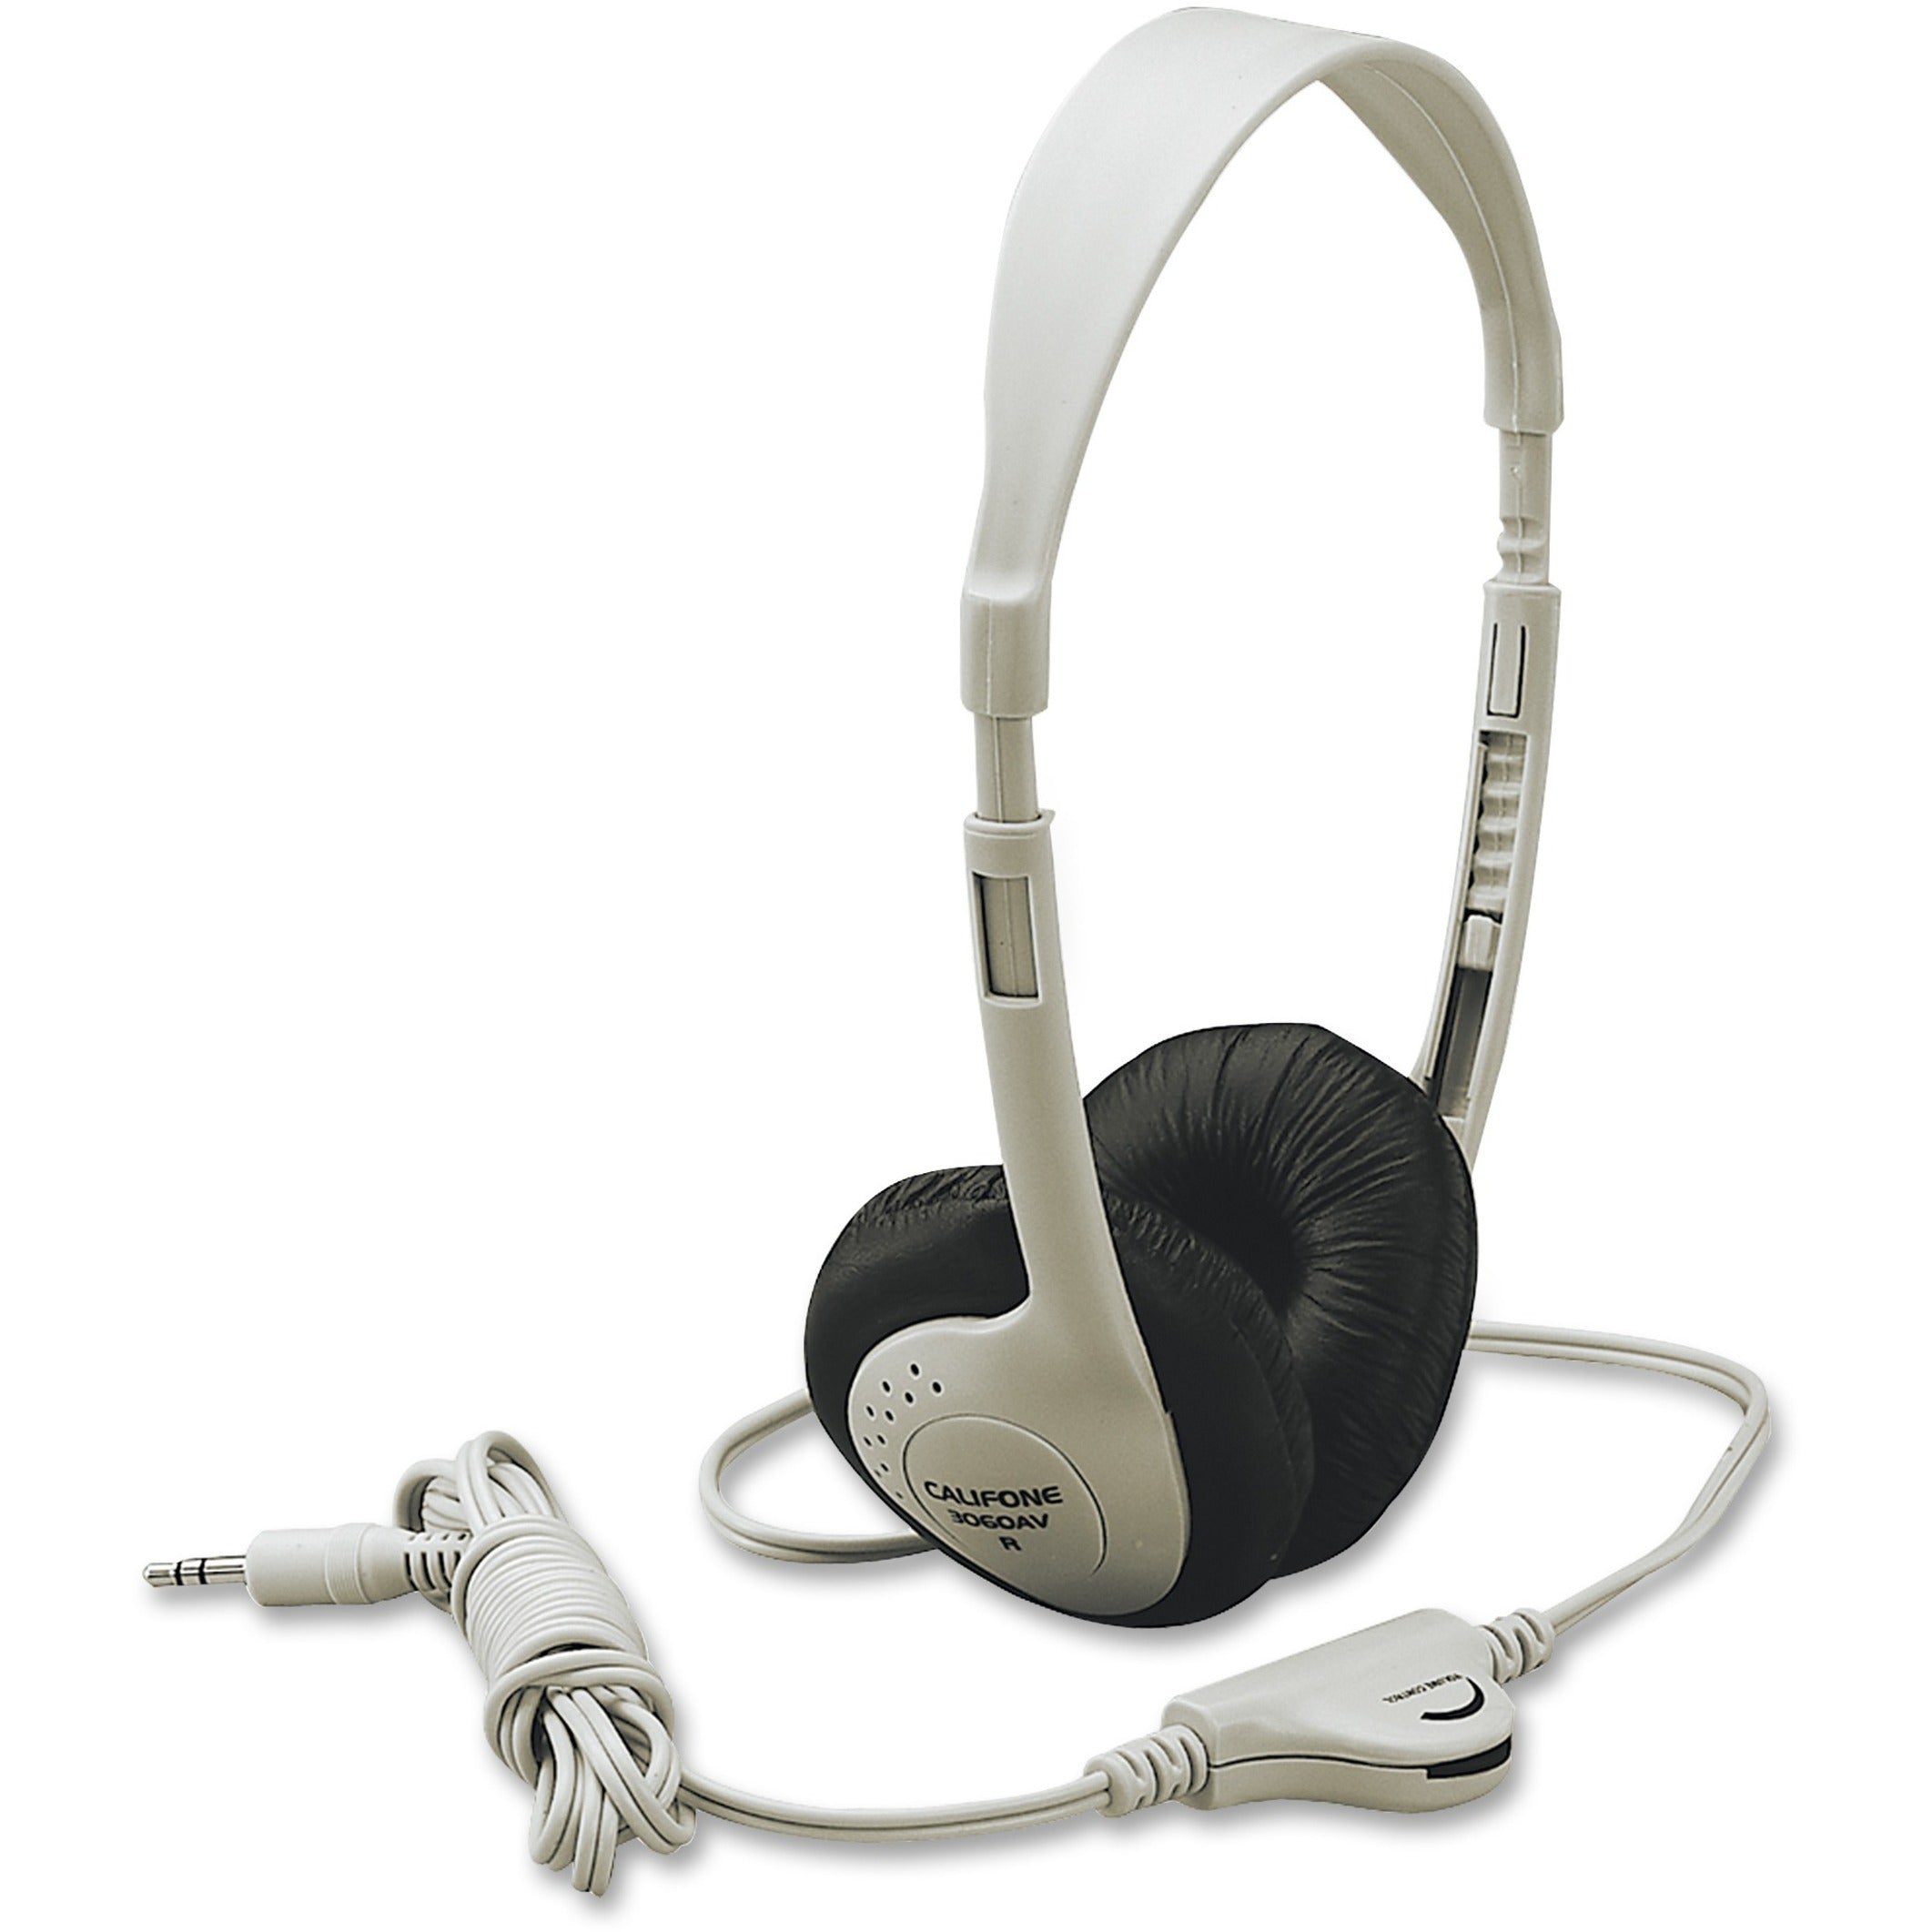 Califone 3060AV Multimedia Stereo Headphone Wired Beige, Adjustable Headband, Lightweight